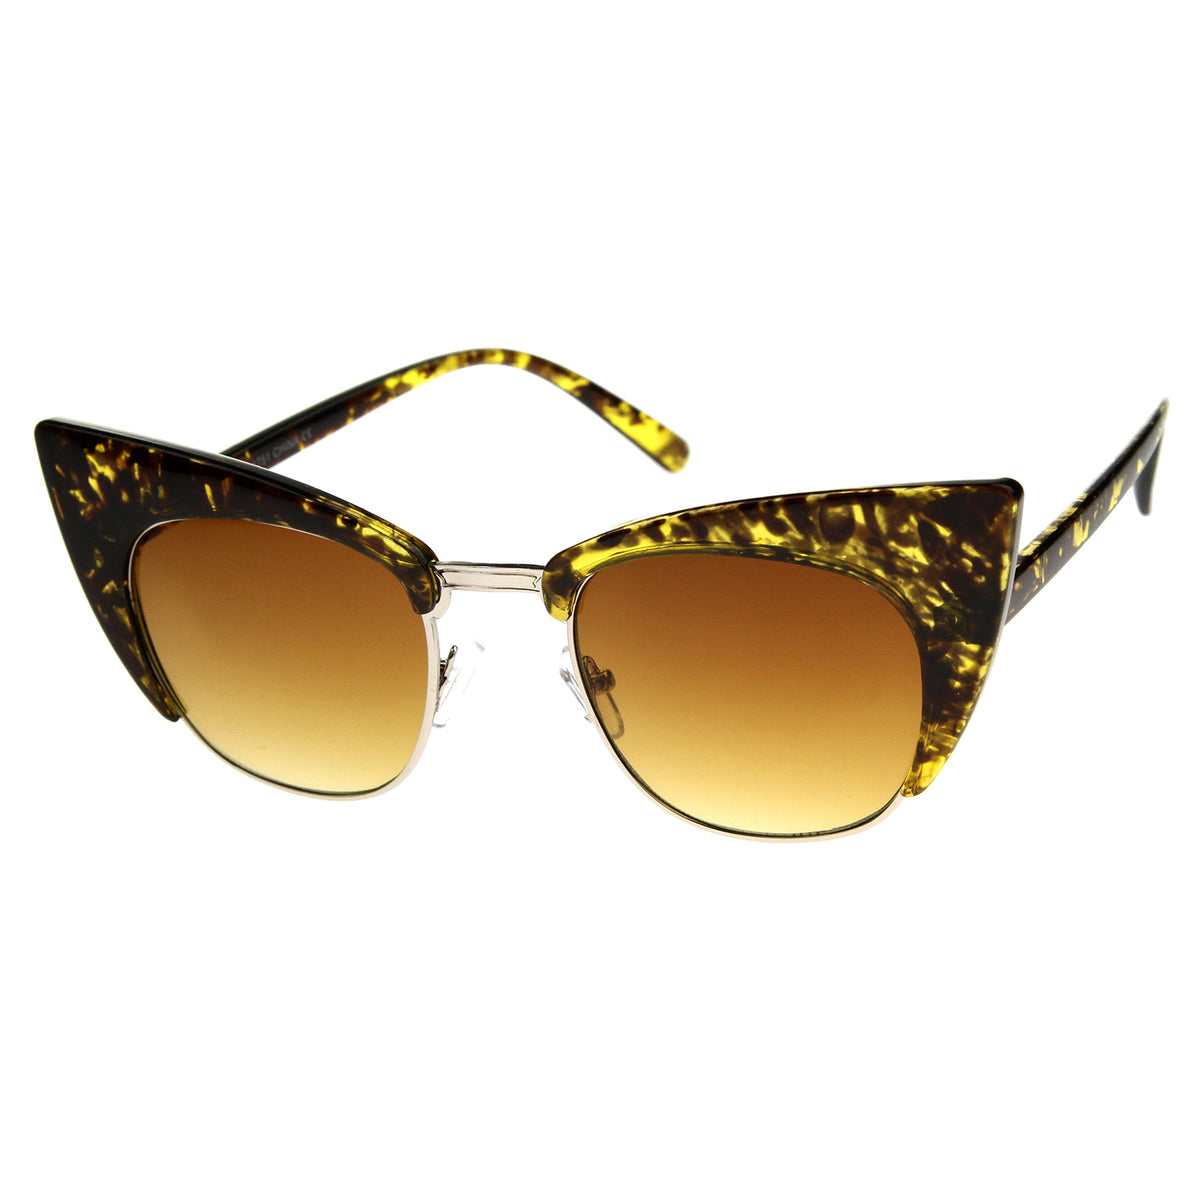 Women's High Fashion Half Frame Bold Square Cat Eye Sunglasses 50mm ...